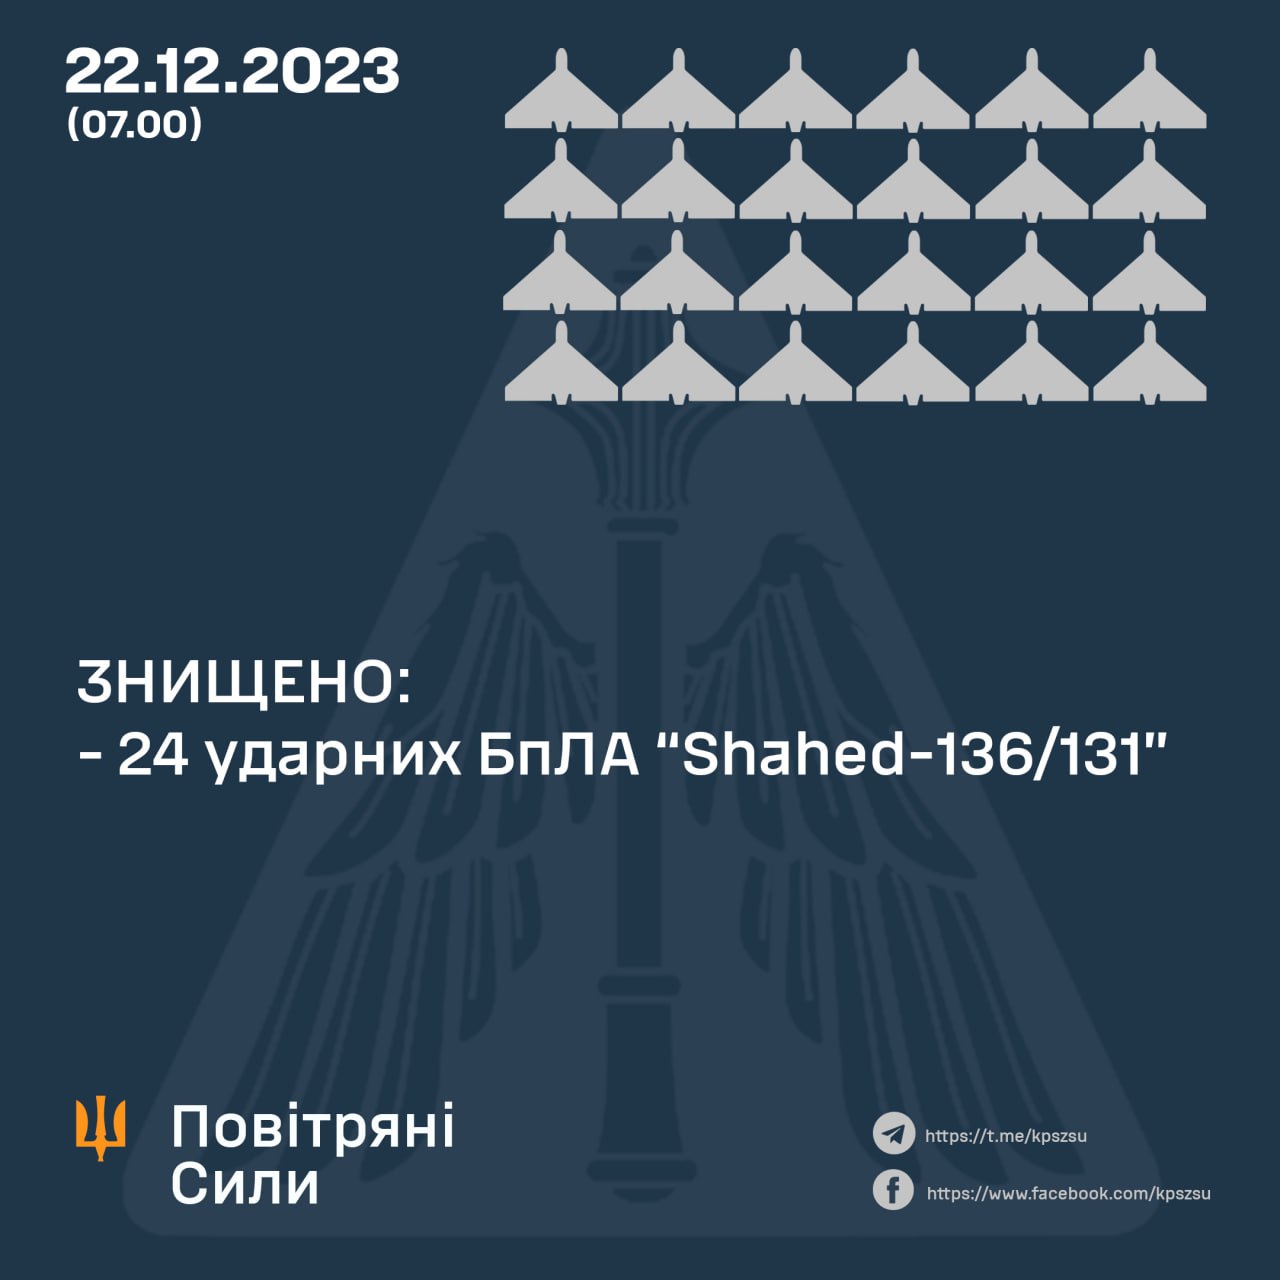 Атака "Шахедов" по Украине 22 декабря 2023 года